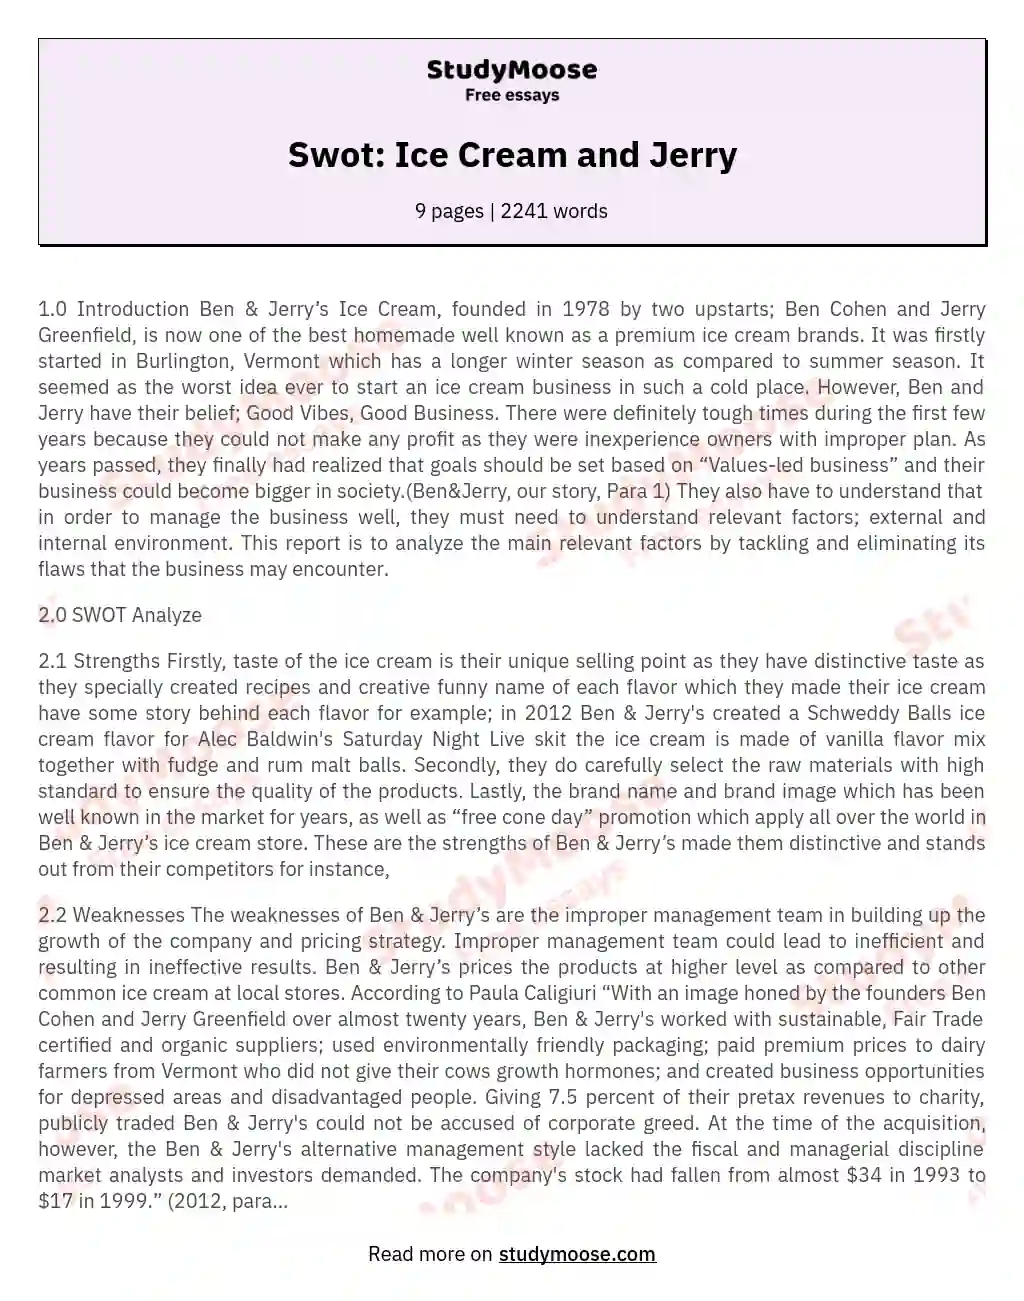 Swot: Ice Cream and Jerry essay